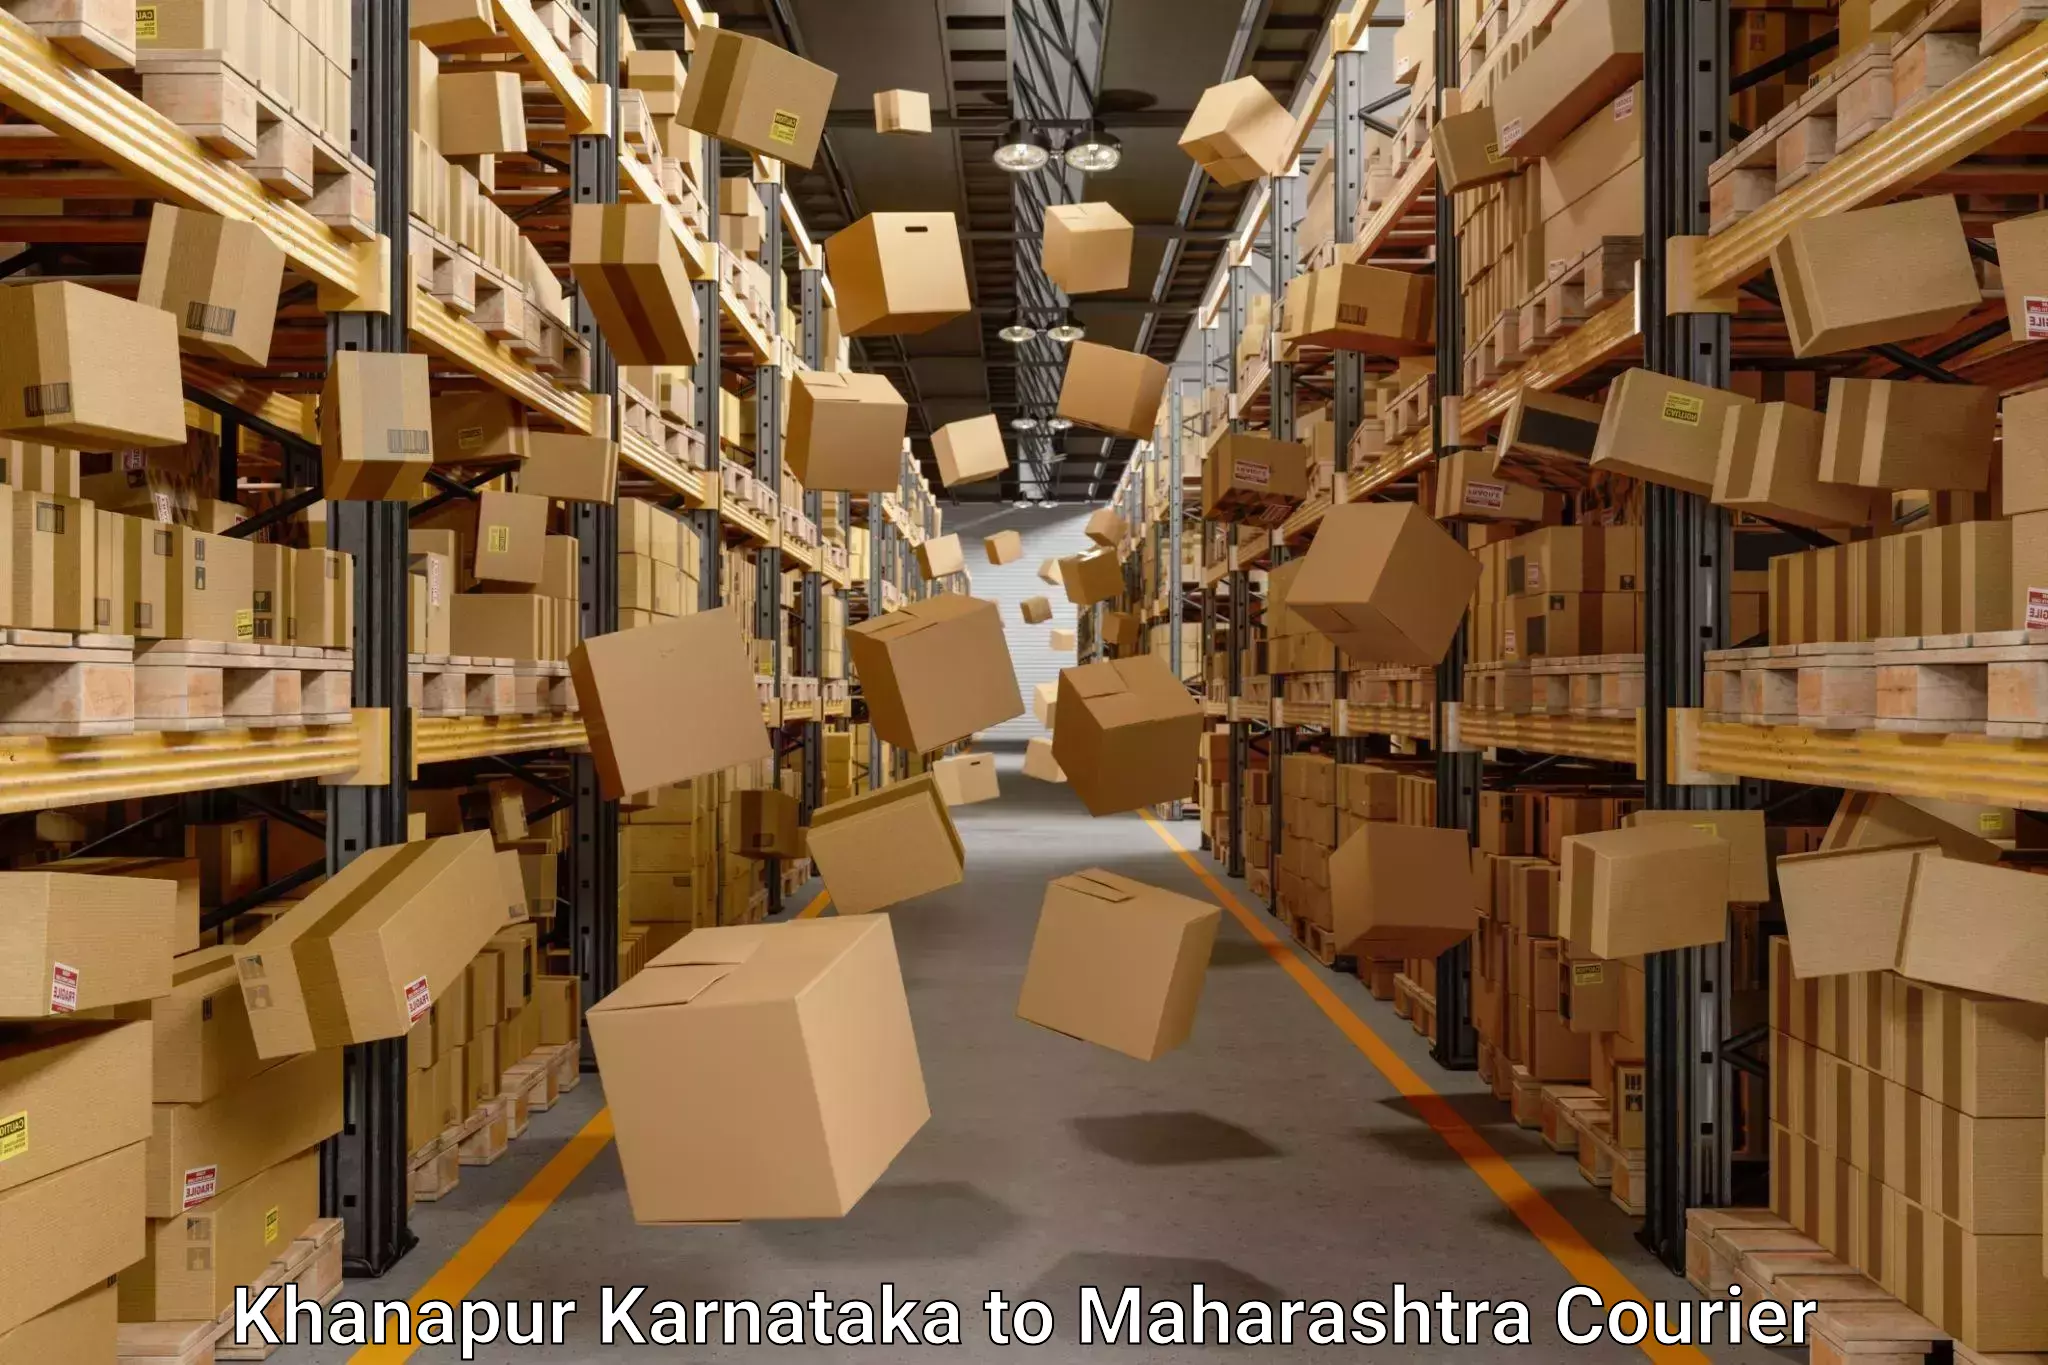 Cost-effective moving options Khanapur Karnataka to Nagothane